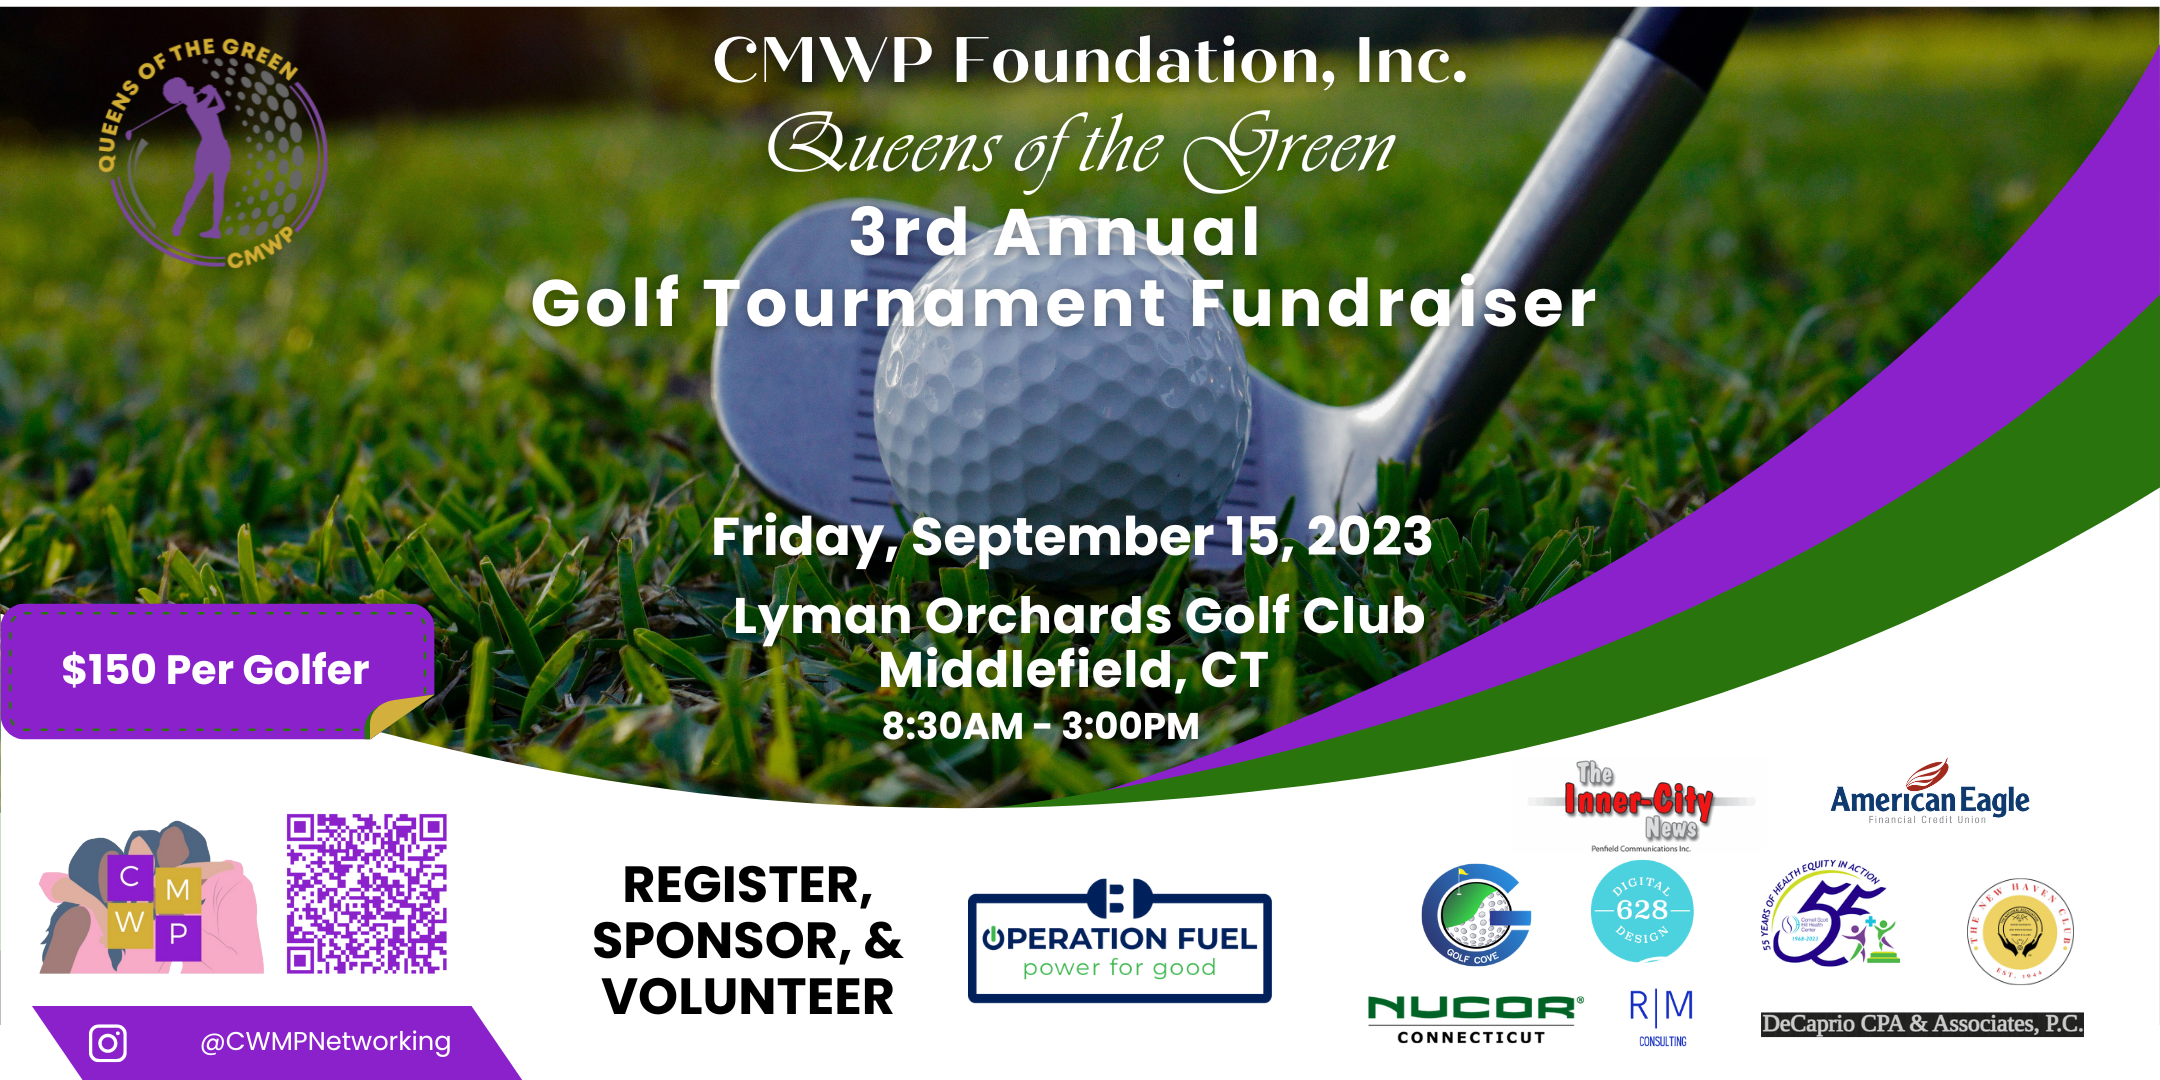 3rd Annual CMWP “Queens of the Green” Golf Tournament